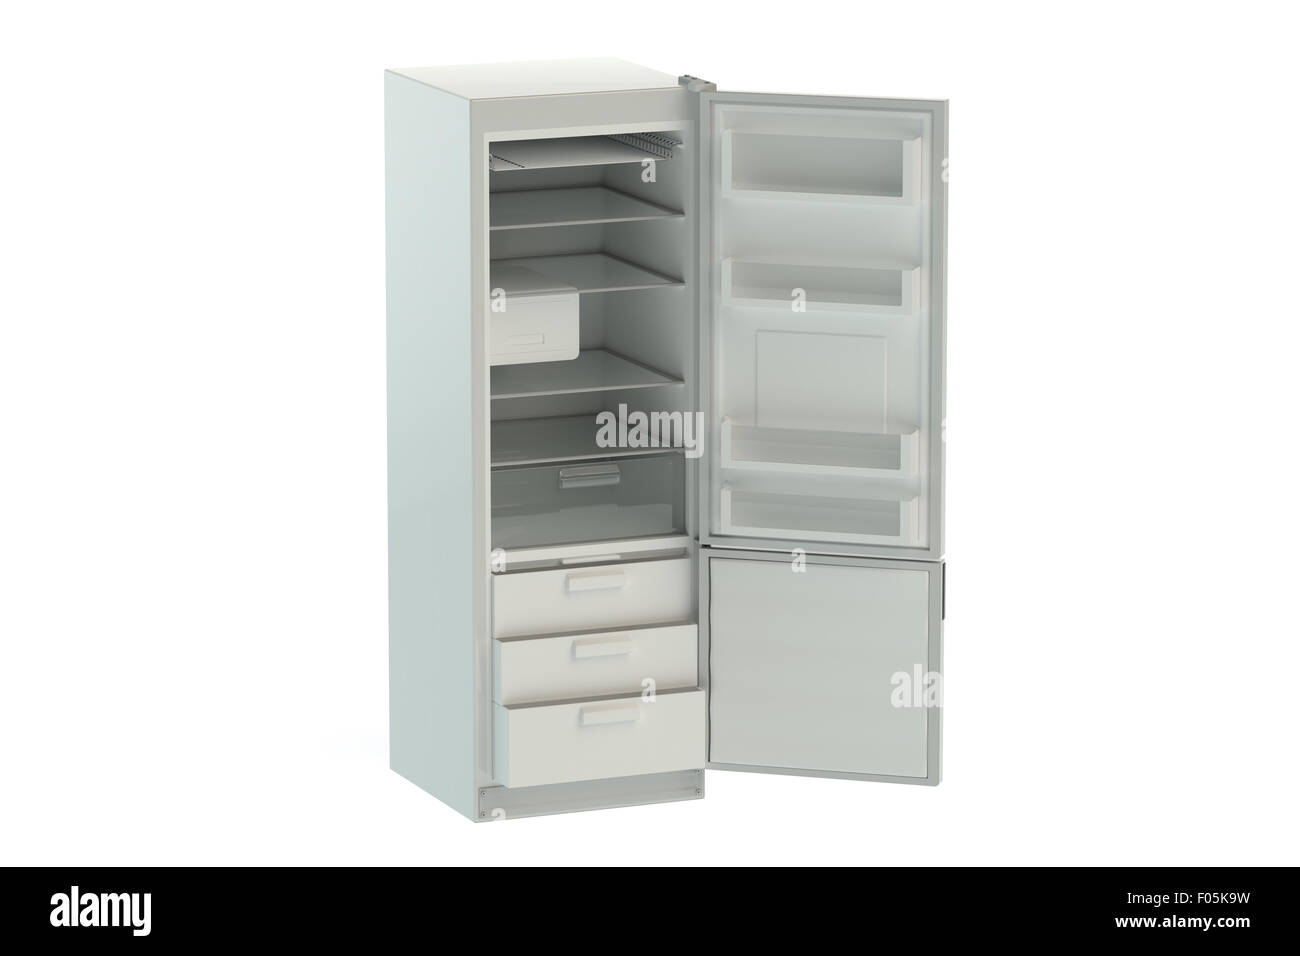 White open Refrigerator isolated on white background Stock Photo